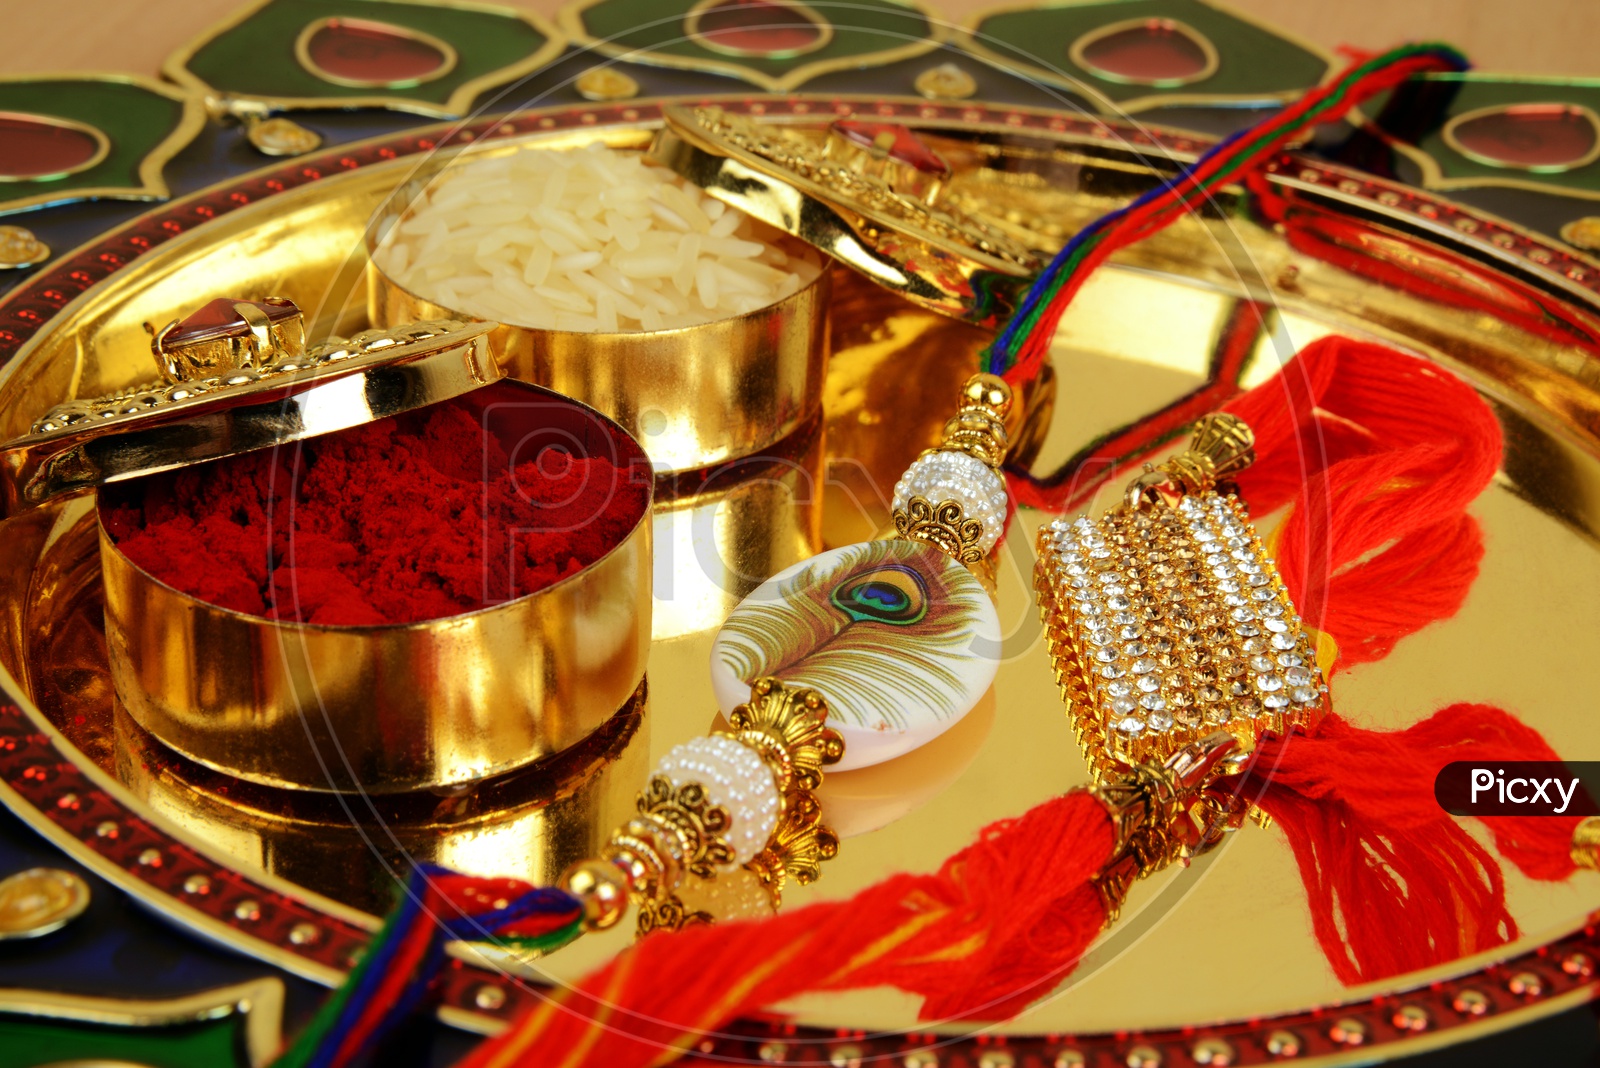 Raksha Bandhan or Rakhi, an Indian traditional festival for brother and sister